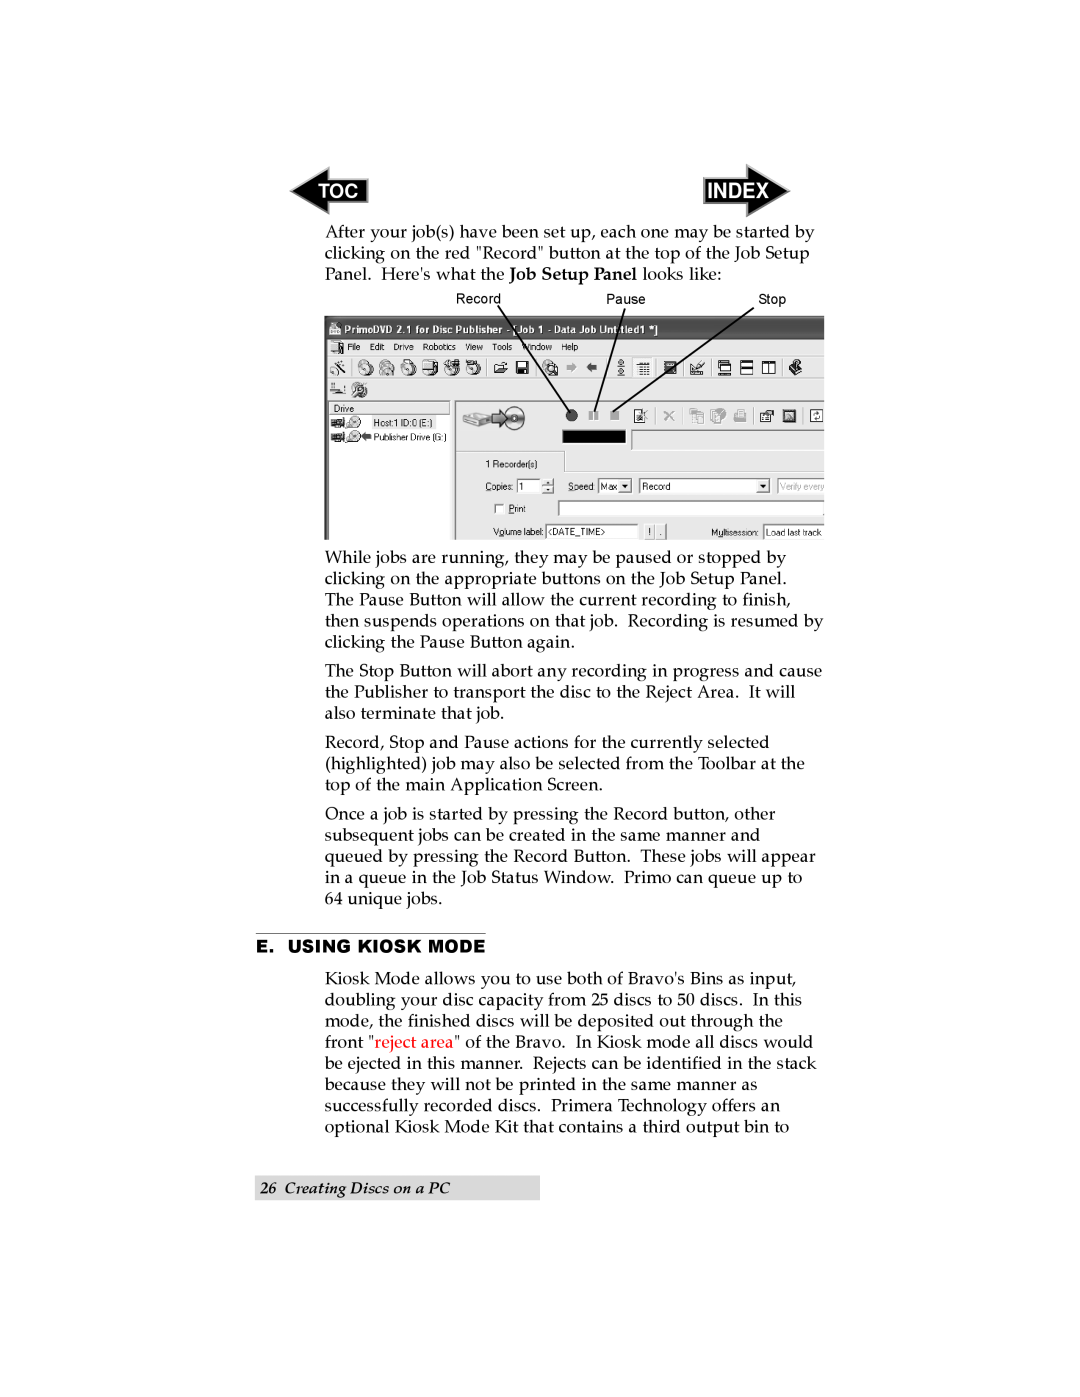 Primera Technology II user manual Index, E. Using Kiosk Mode, Creating Discs on a PC 